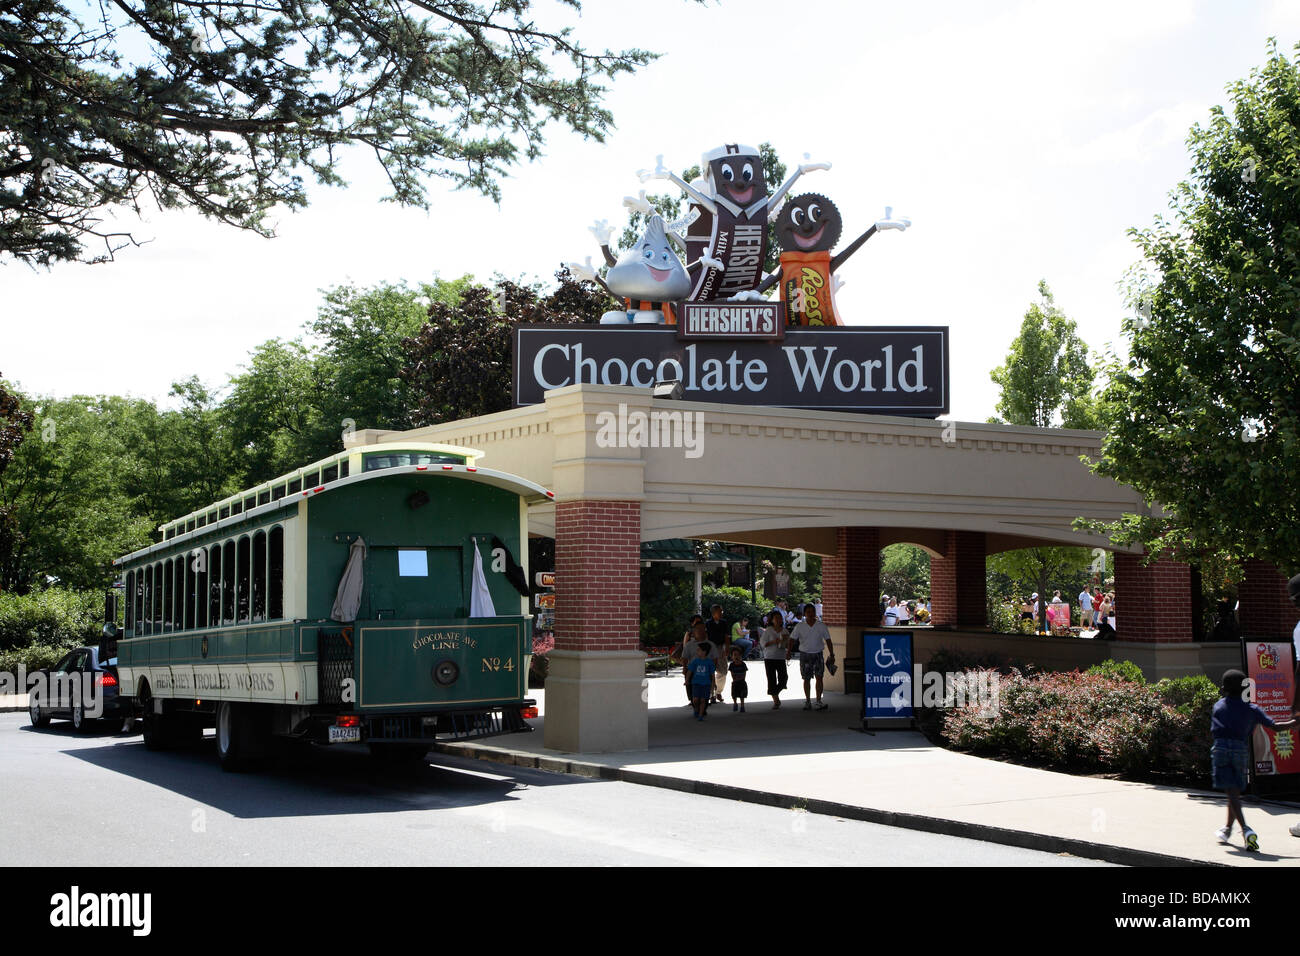 Chocolate world welcome in Hershey PA. Stock Photo